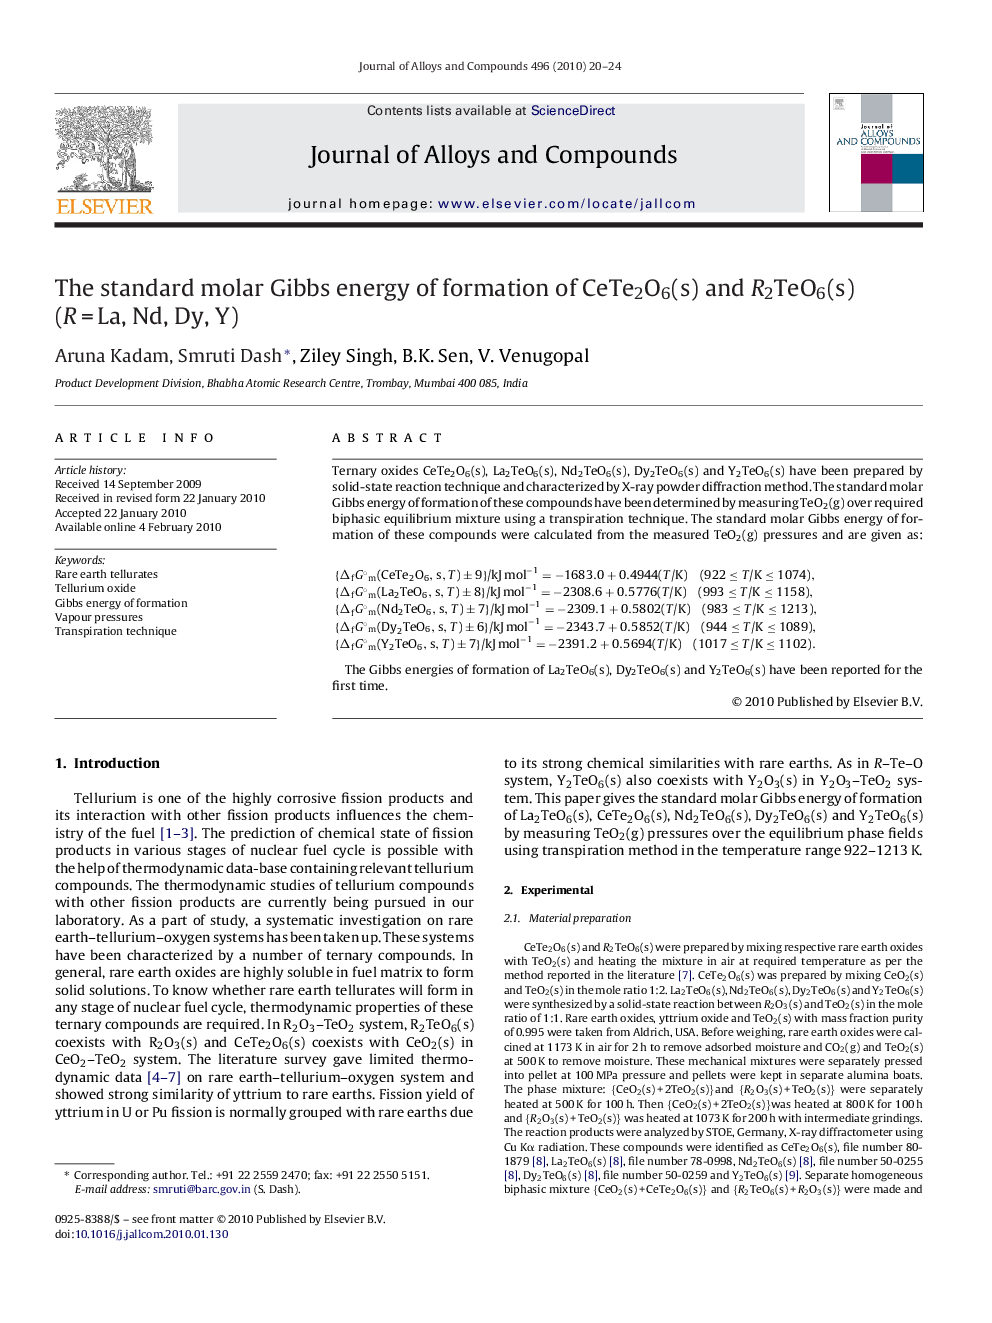 The standard molar Gibbs energy of formation of CeTe2O6(s) and R2TeO6(s) (RÂ =Â La, Nd, Dy, Y)